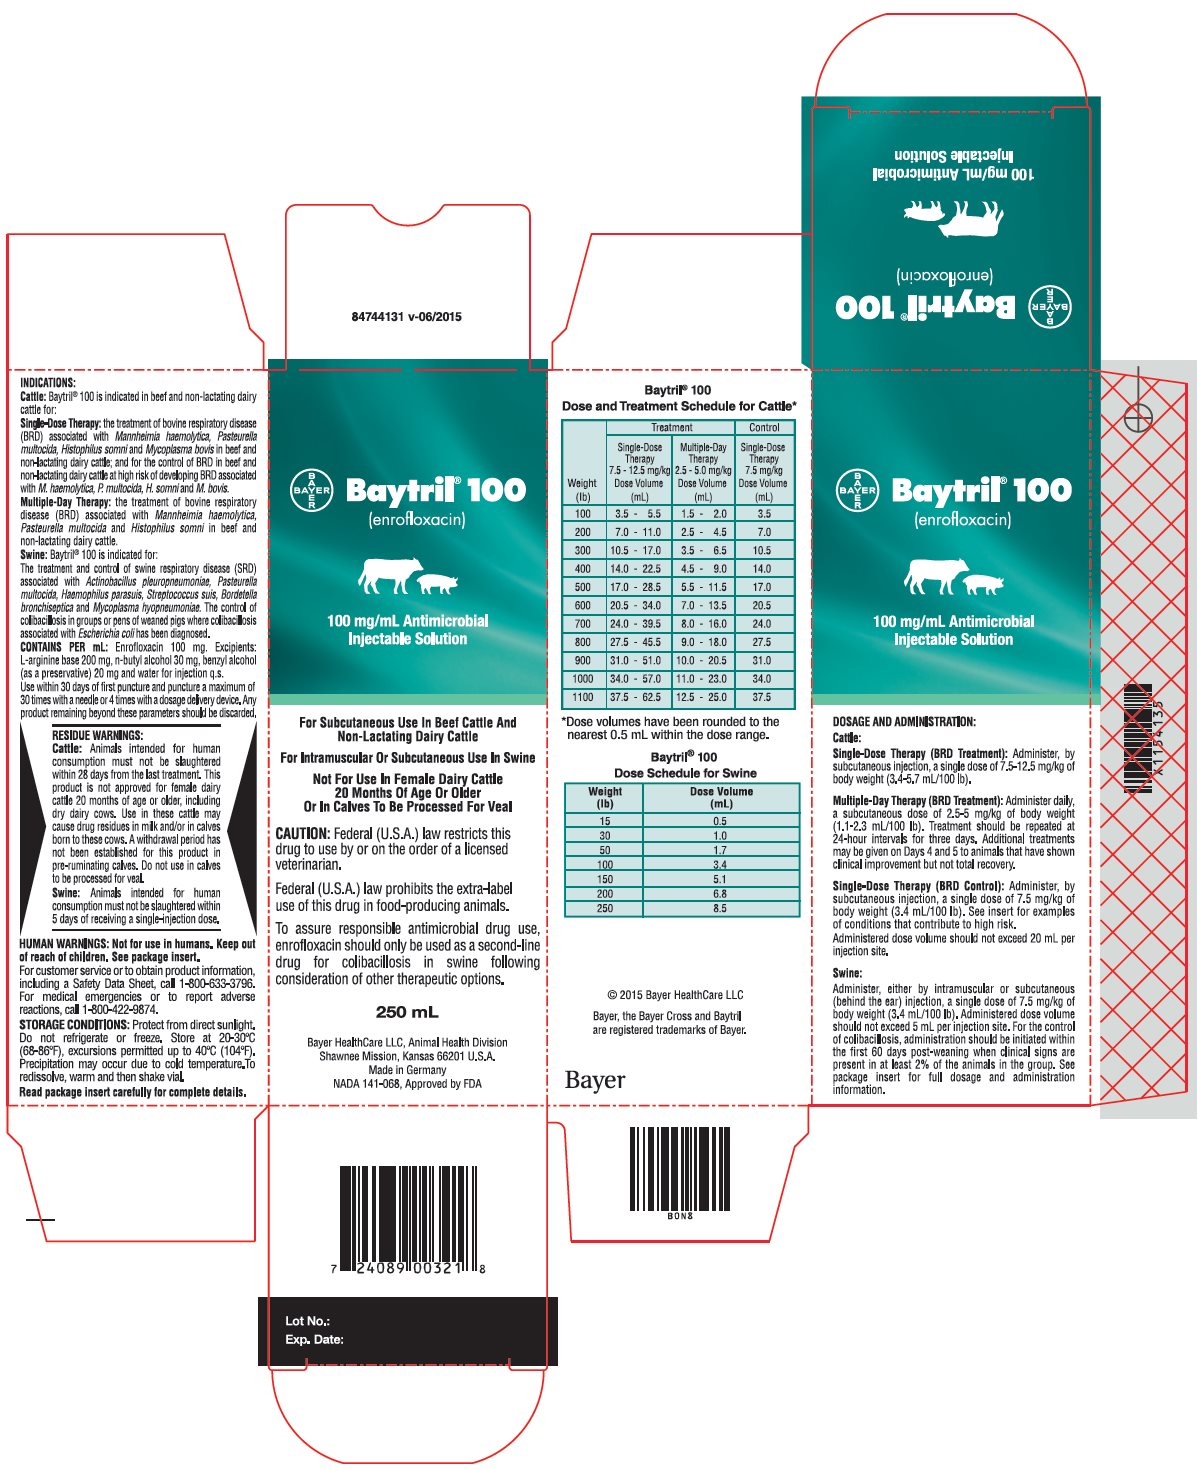 Baytril 100 (enrofloxacin) 100 mg/mL Antimicrobial Injectable Solution 250 mL Carton Label